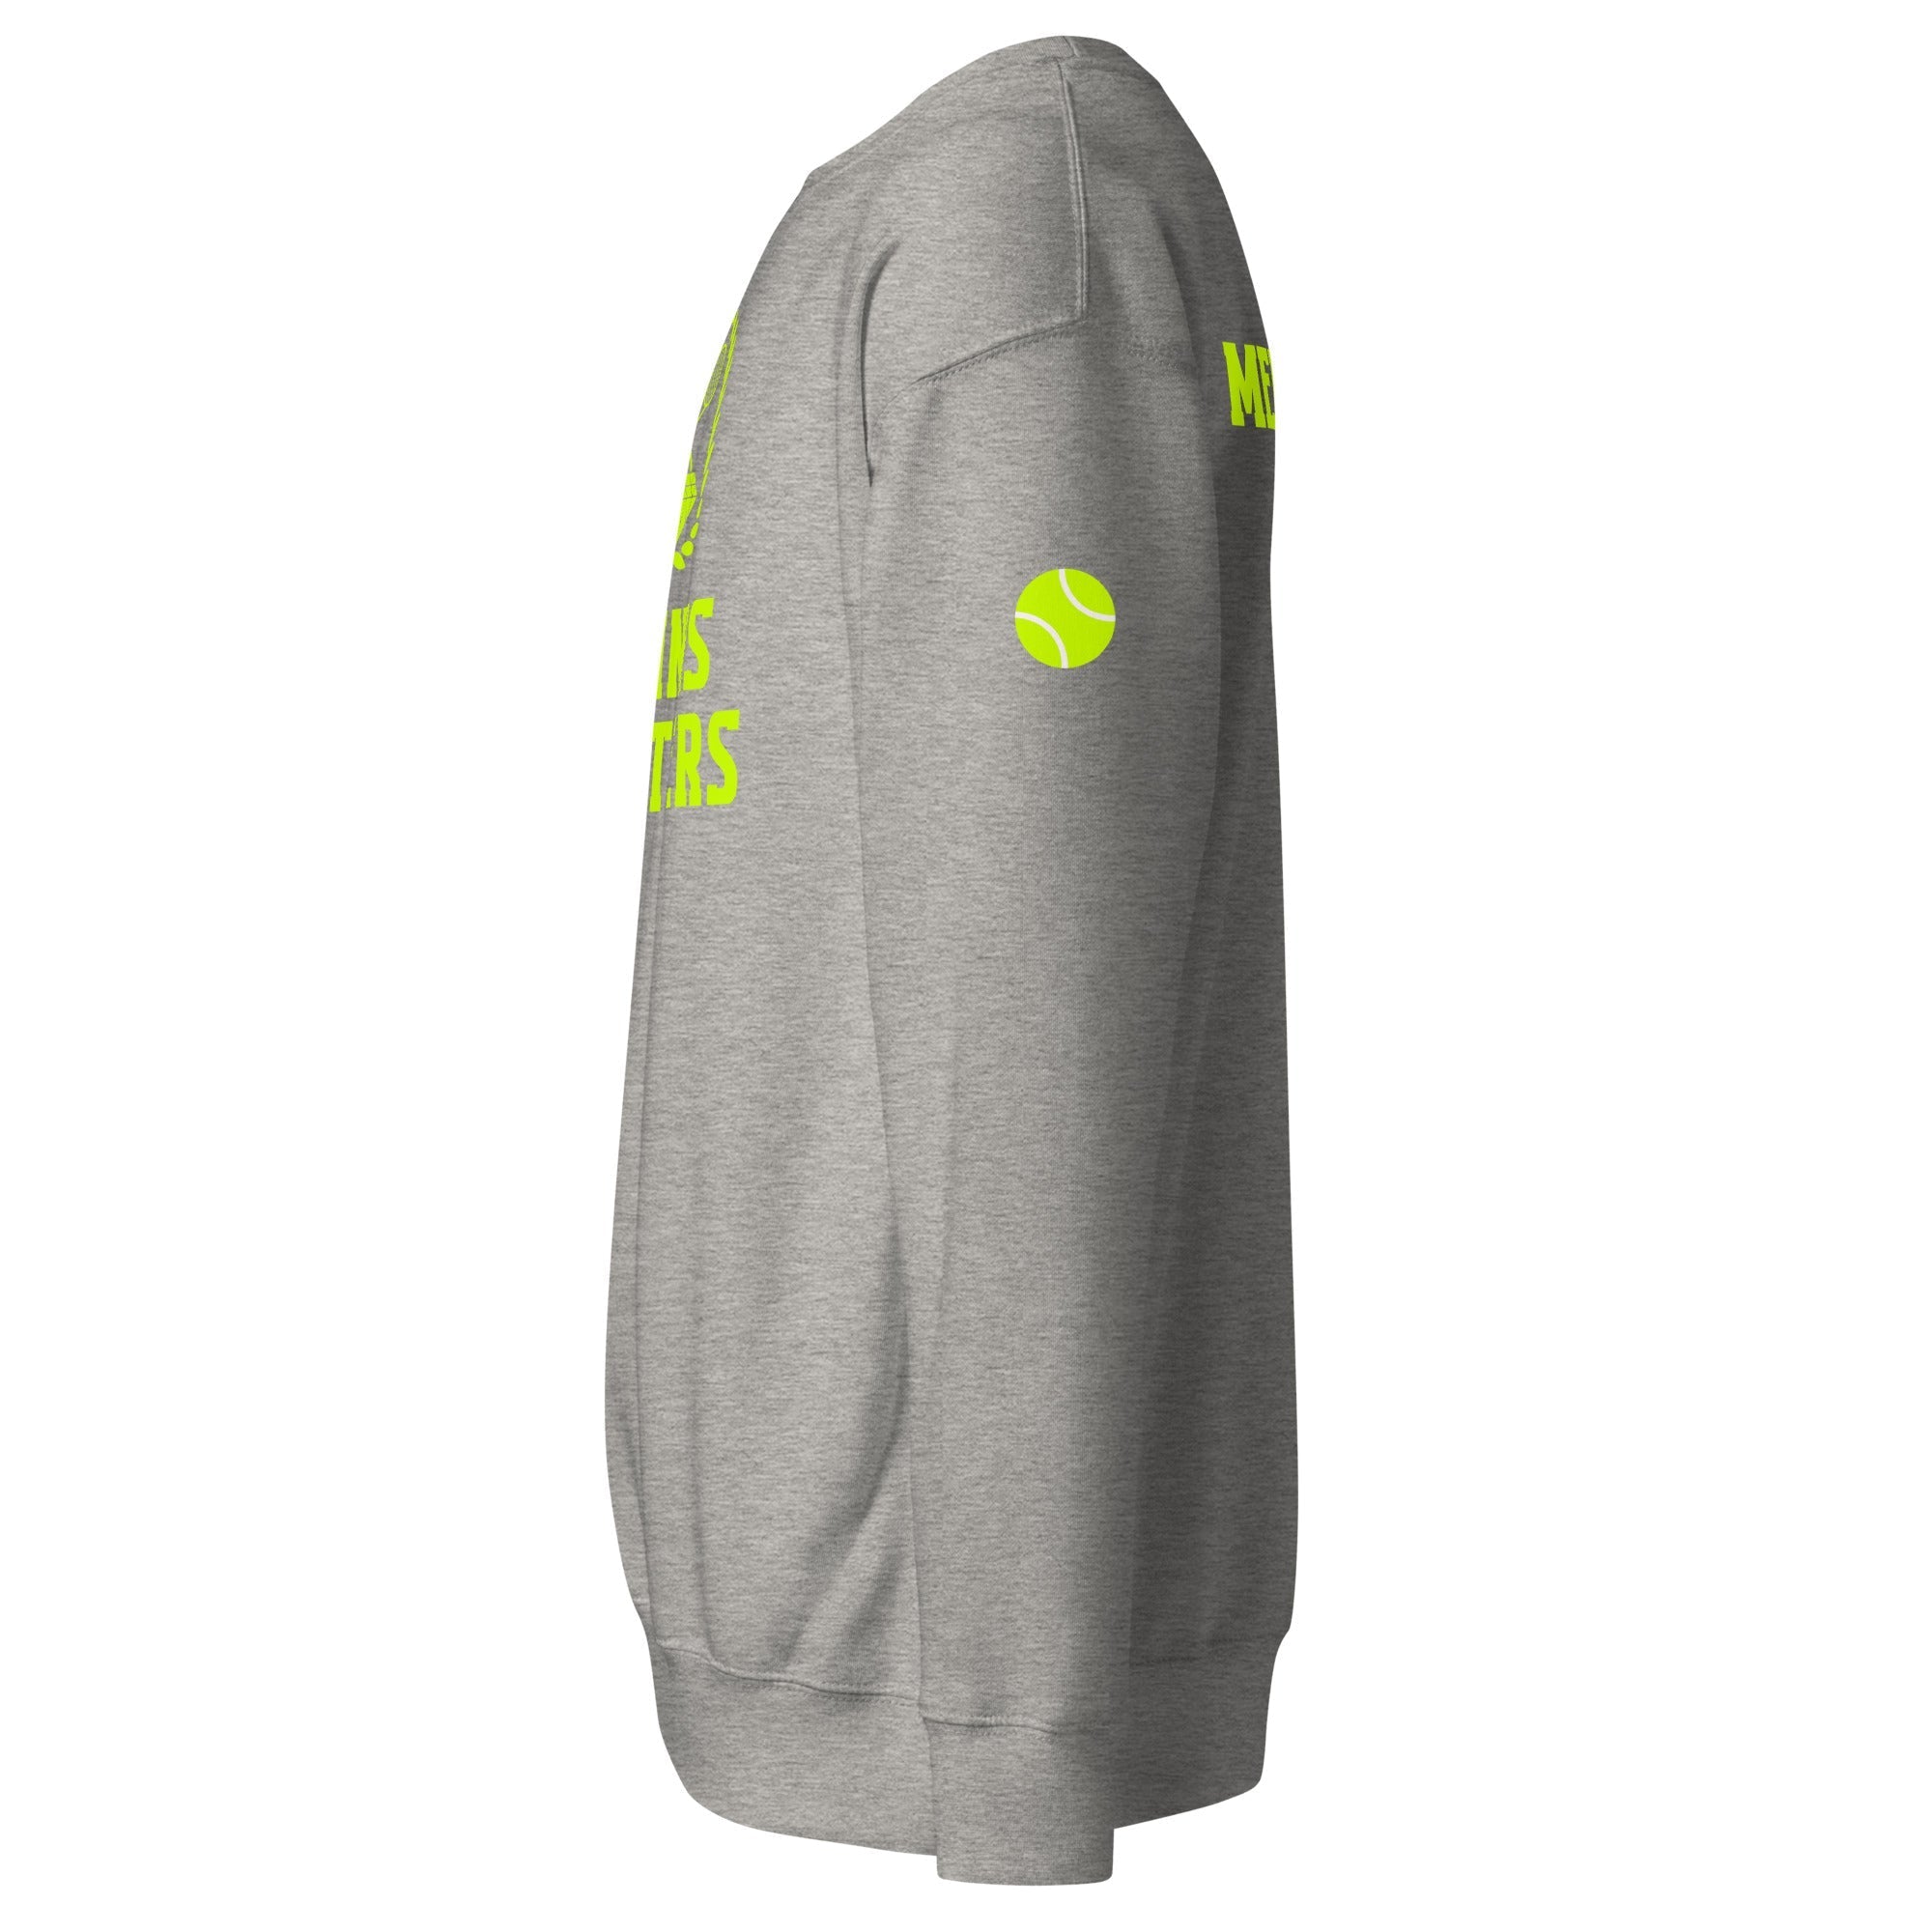 Unisex Premium Sweatshirt - Tennis Masters Melbourne - GRAPHIC T-SHIRTS